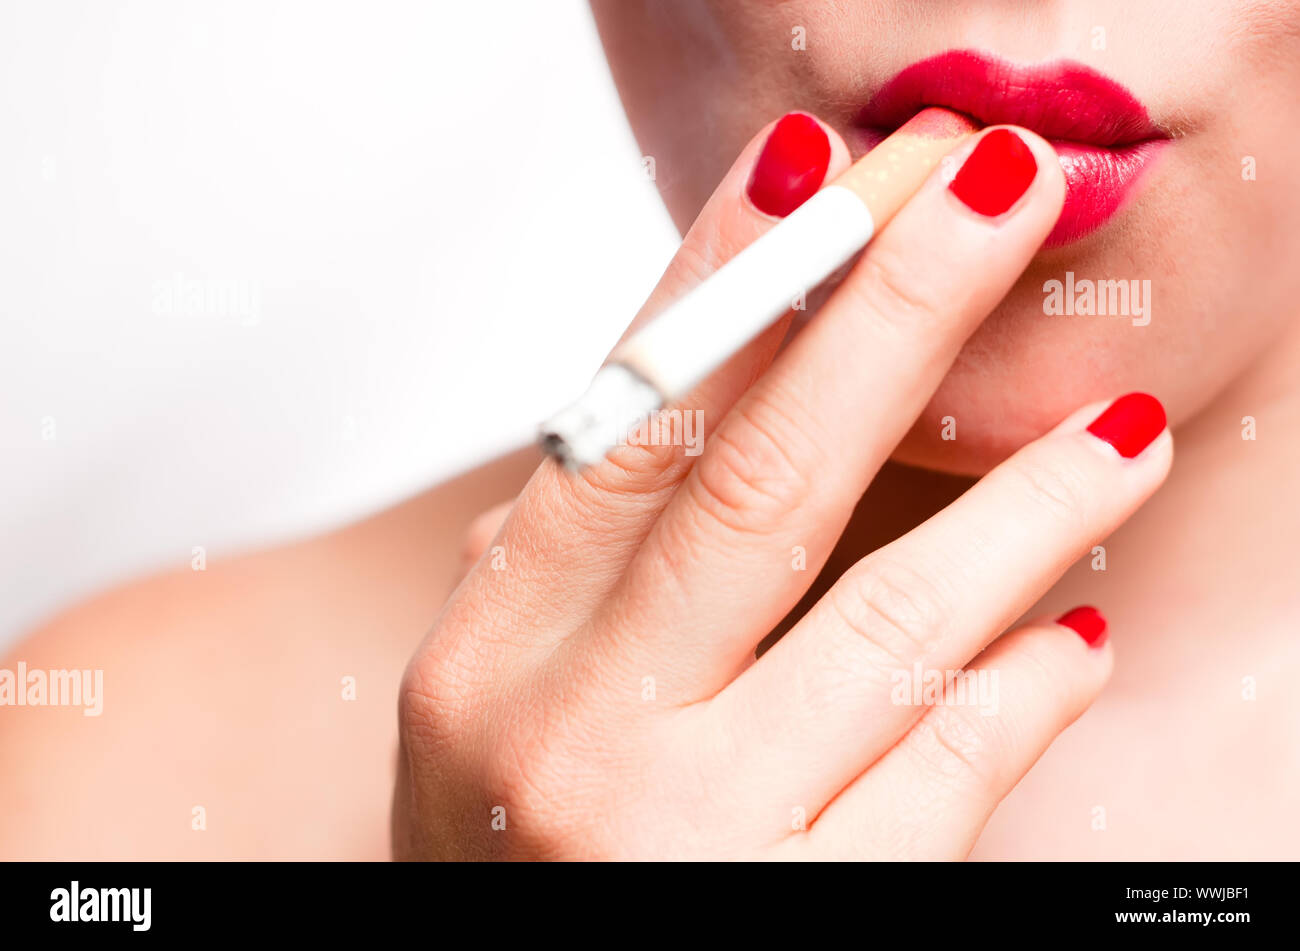 red nails lipstick smoking pics